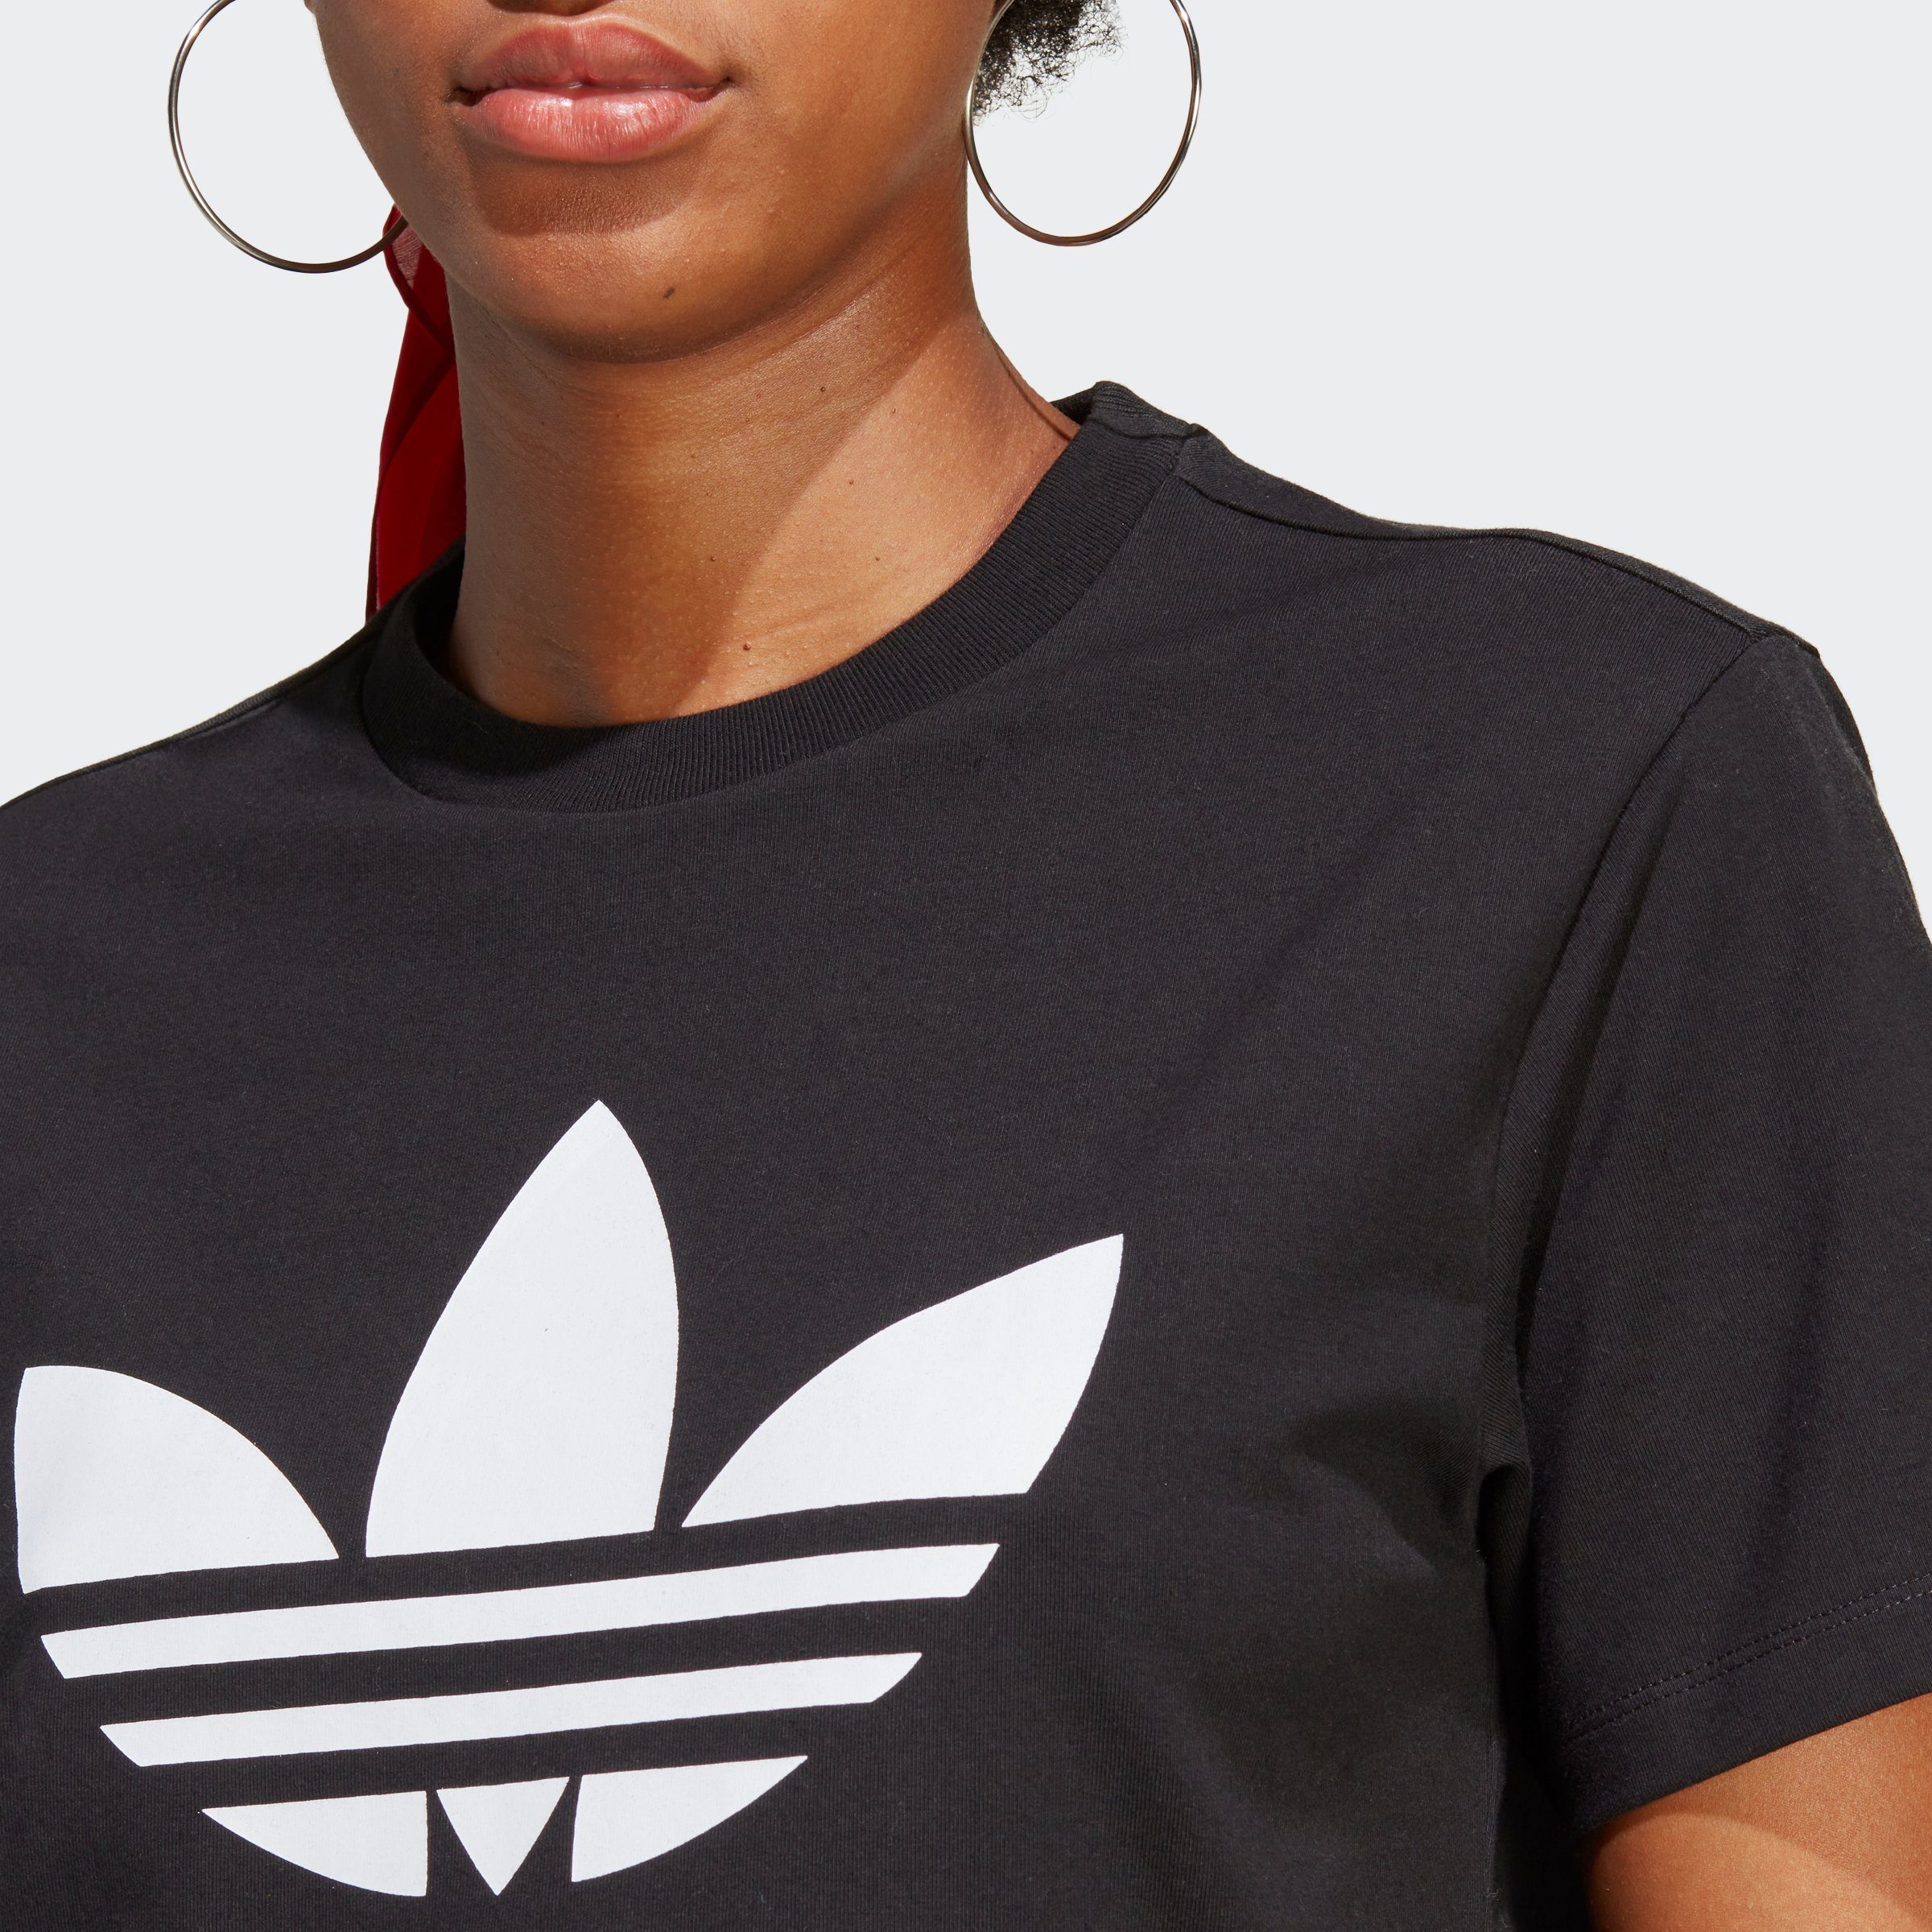 Black ADICOLOR Originals adidas CLASSICS T-Shirt TREFOIL